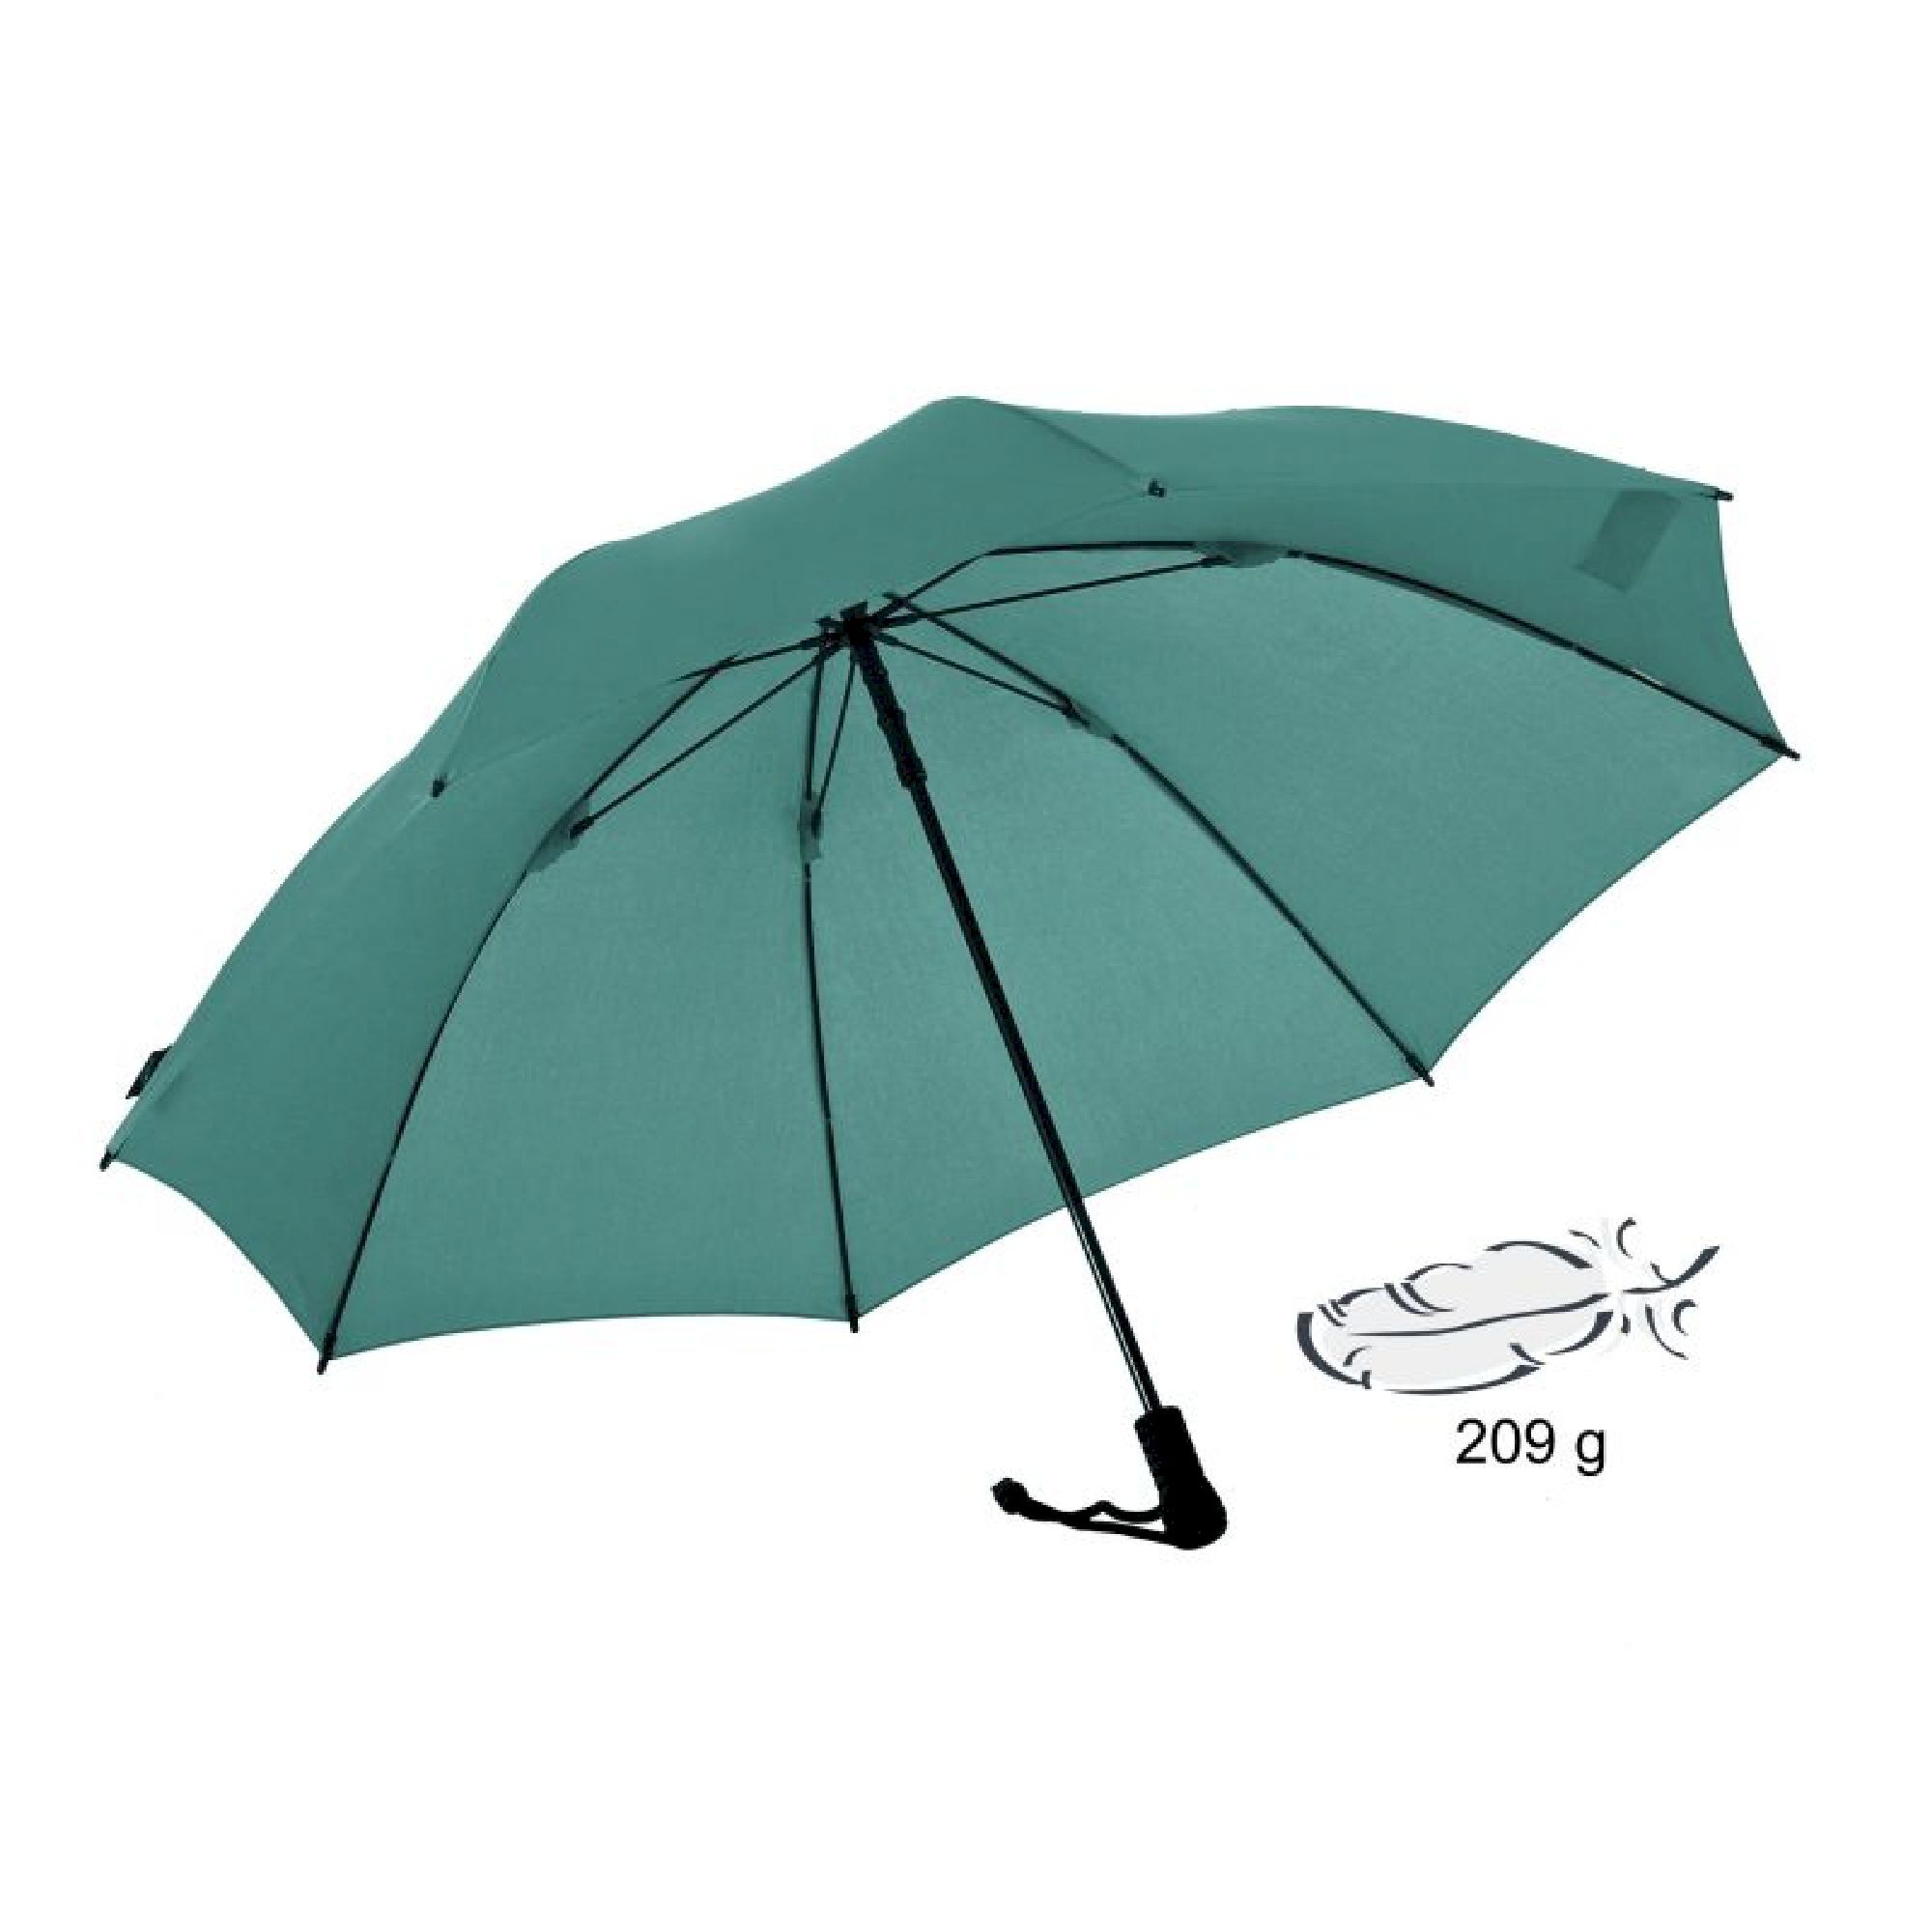 Euroschirm Swing liteflex - Parapluie randonnée | Hardloop